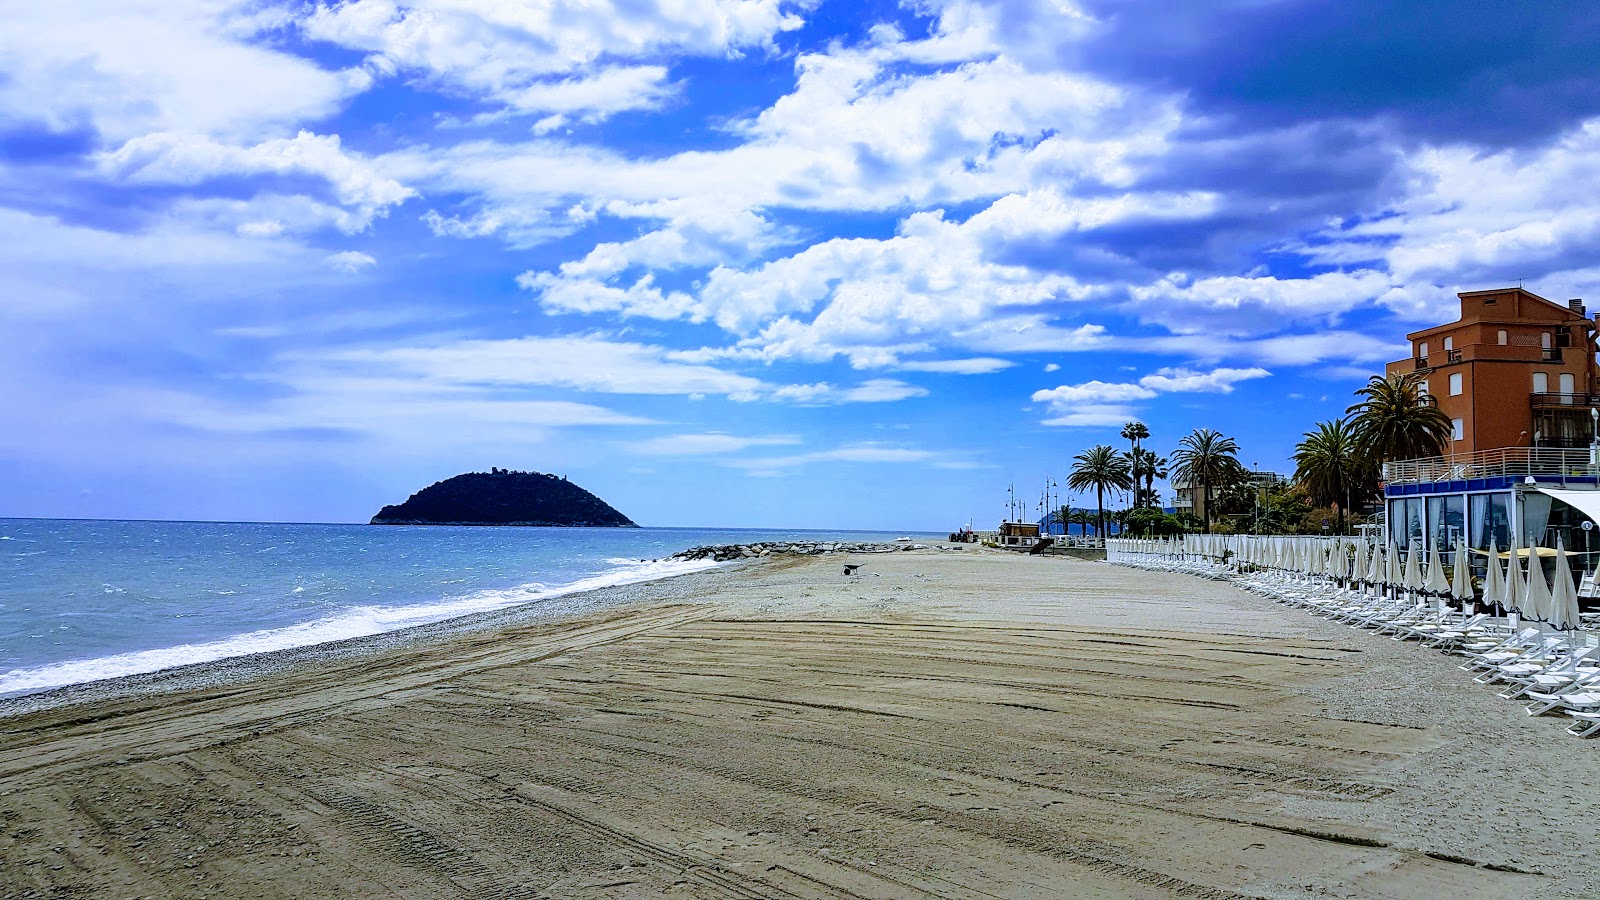 Foto av Doria beach med rymlig strand